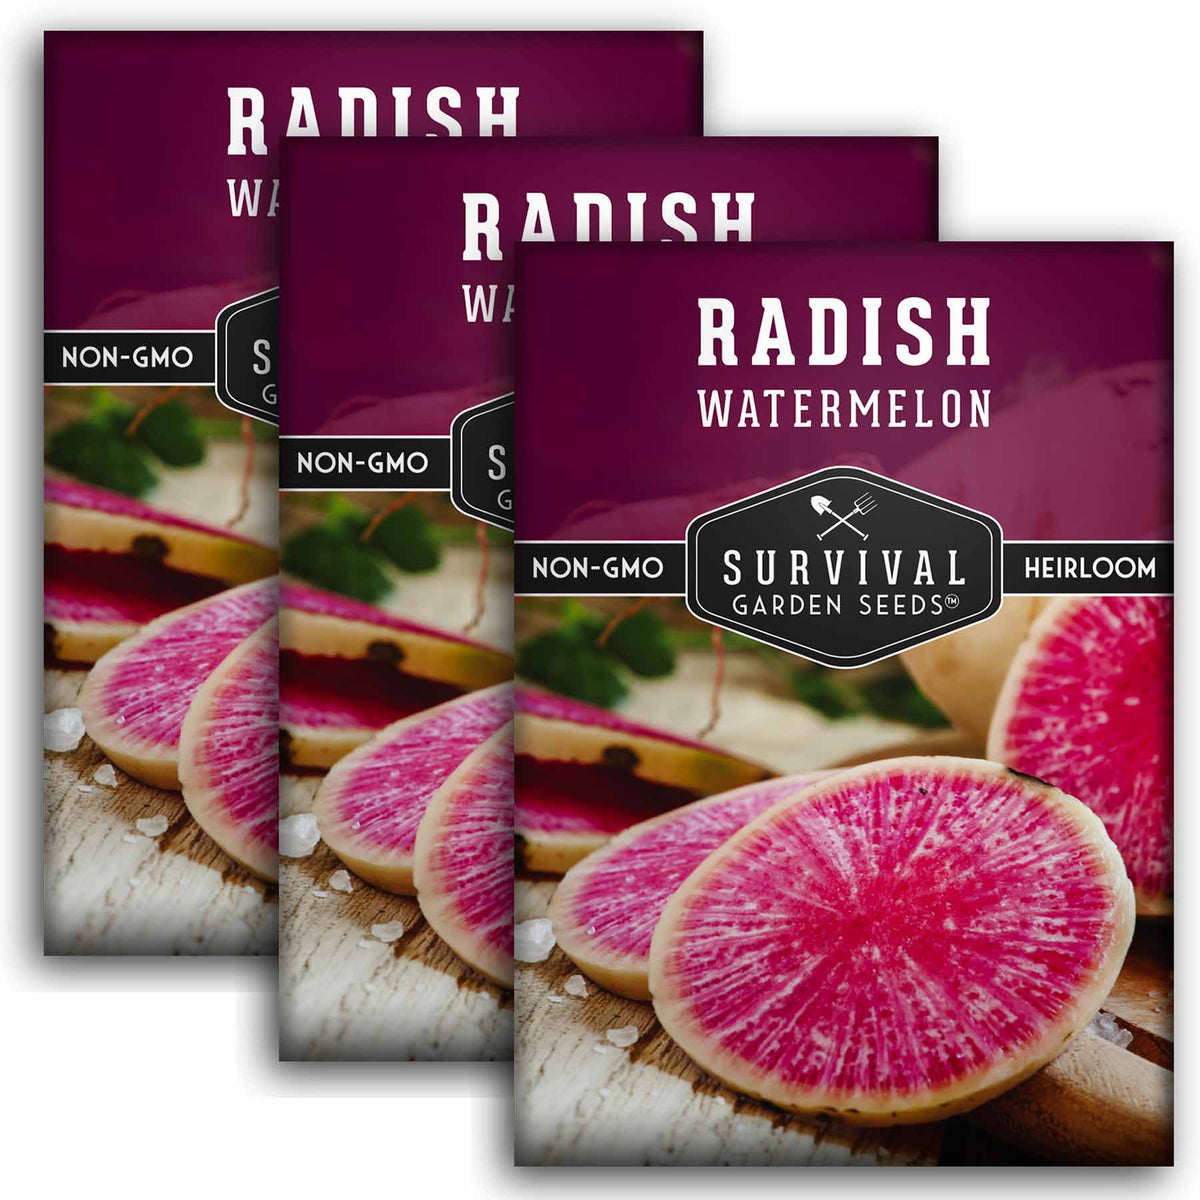 3 packets of Watermelon Radish seeds